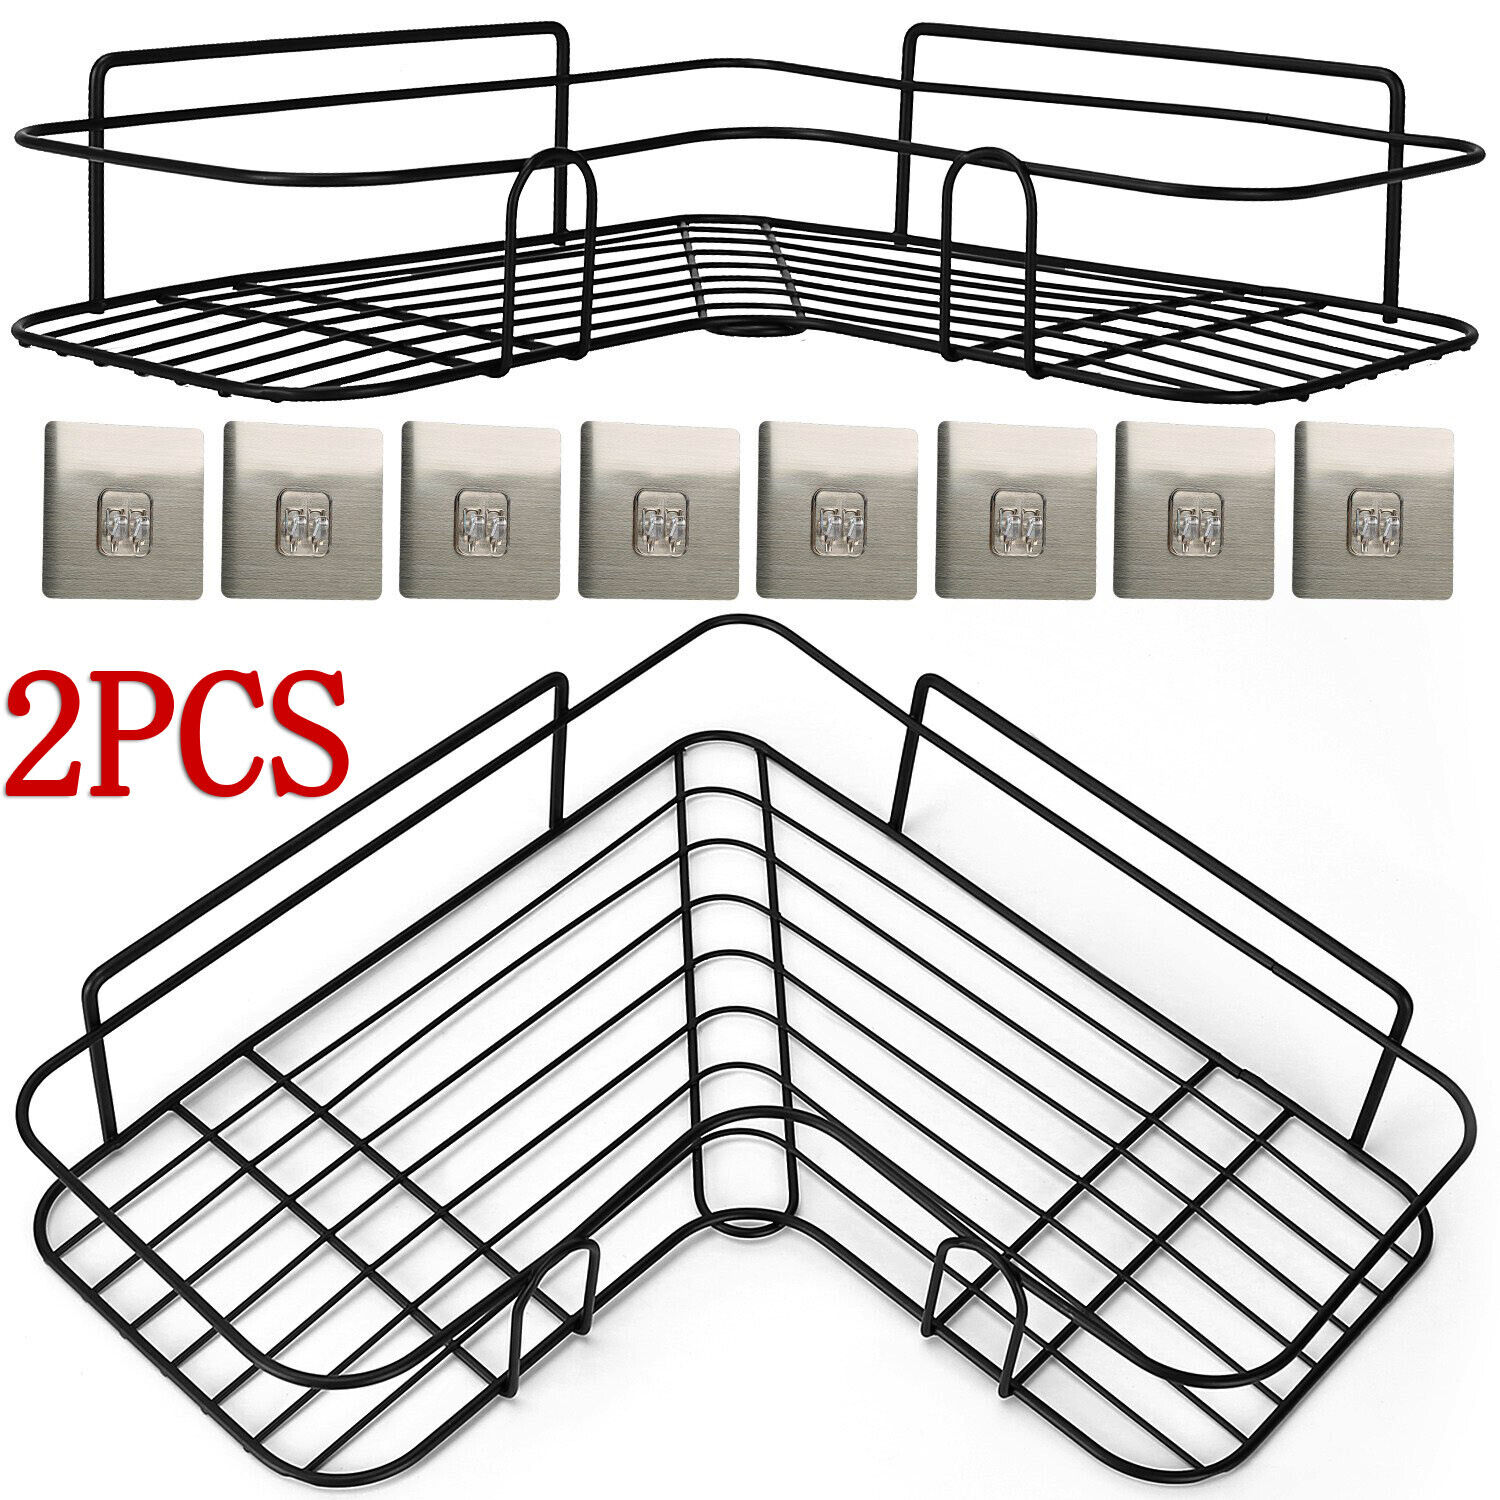 2pcs Shower Caddy Shelf Bathroom Corner Bath Storage Holder Rack +Adhesive Hooks iMounTEK Does not apply - фотография #9